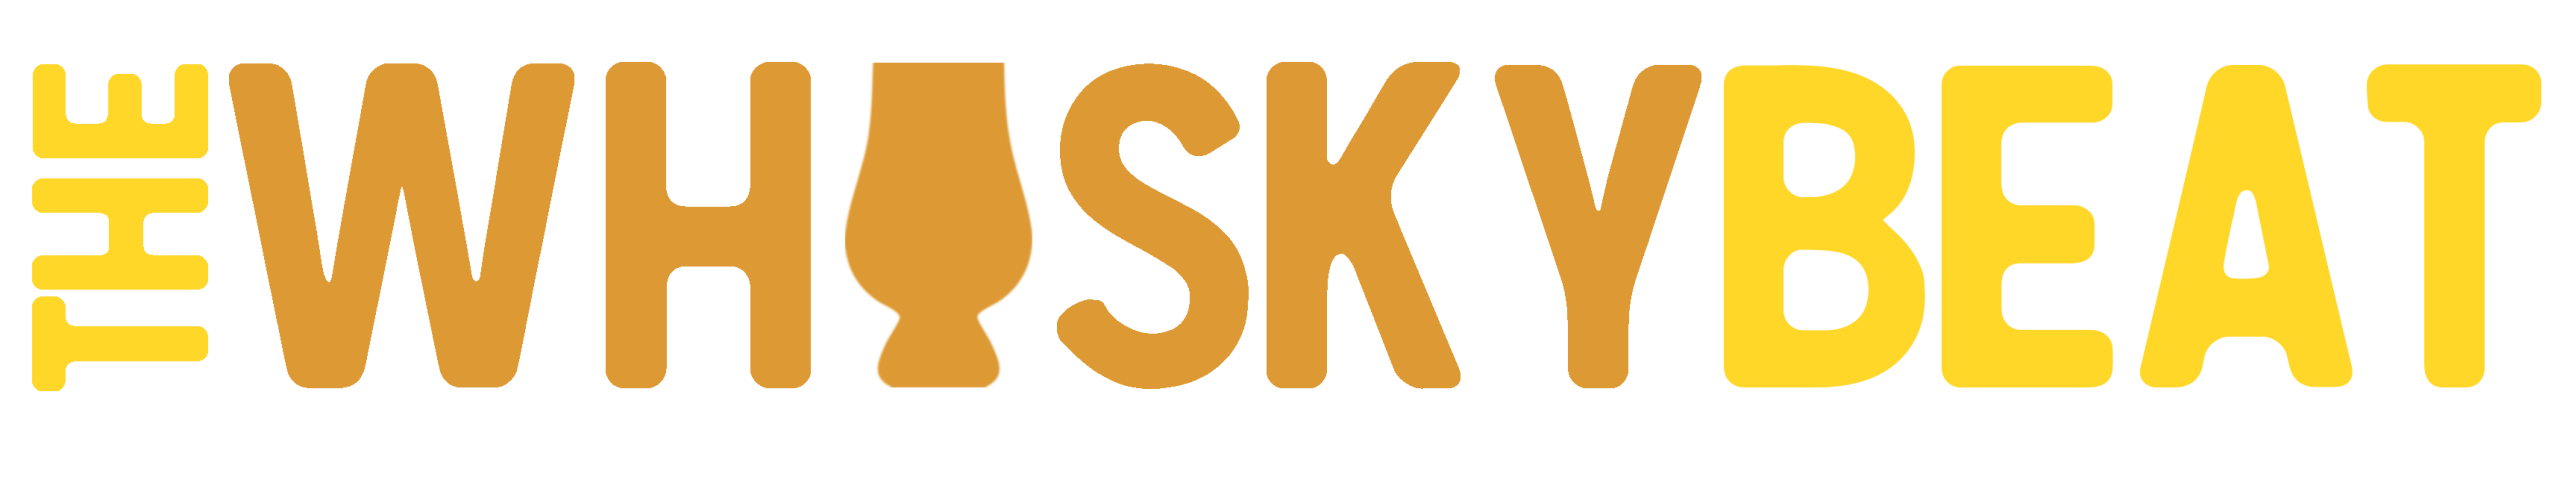 TheWhiskyBeat_Logo_v2